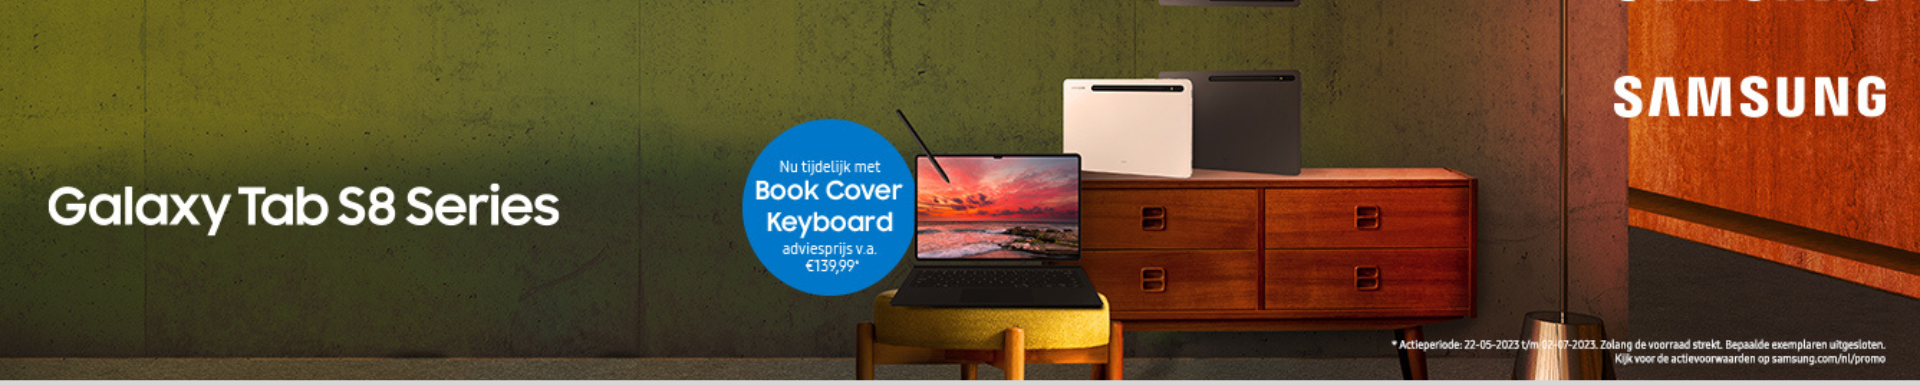 Gratis Book Cover Keyboard bij aankoop Samsung Galaxy Tab S8